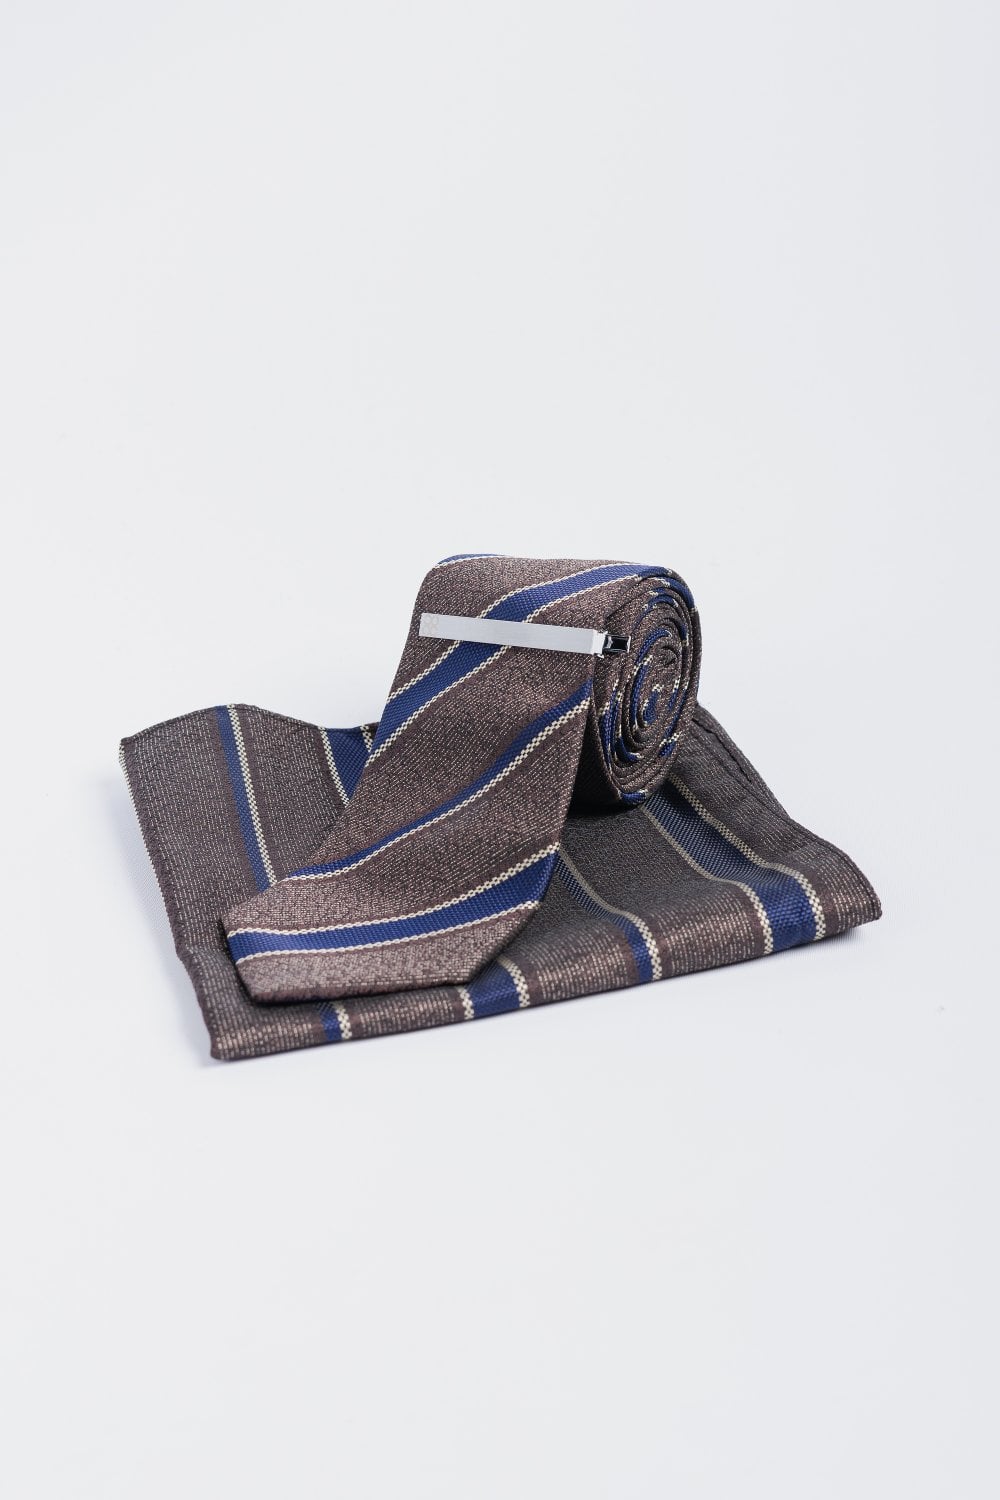 Cavani - Brown Striped Tie Set